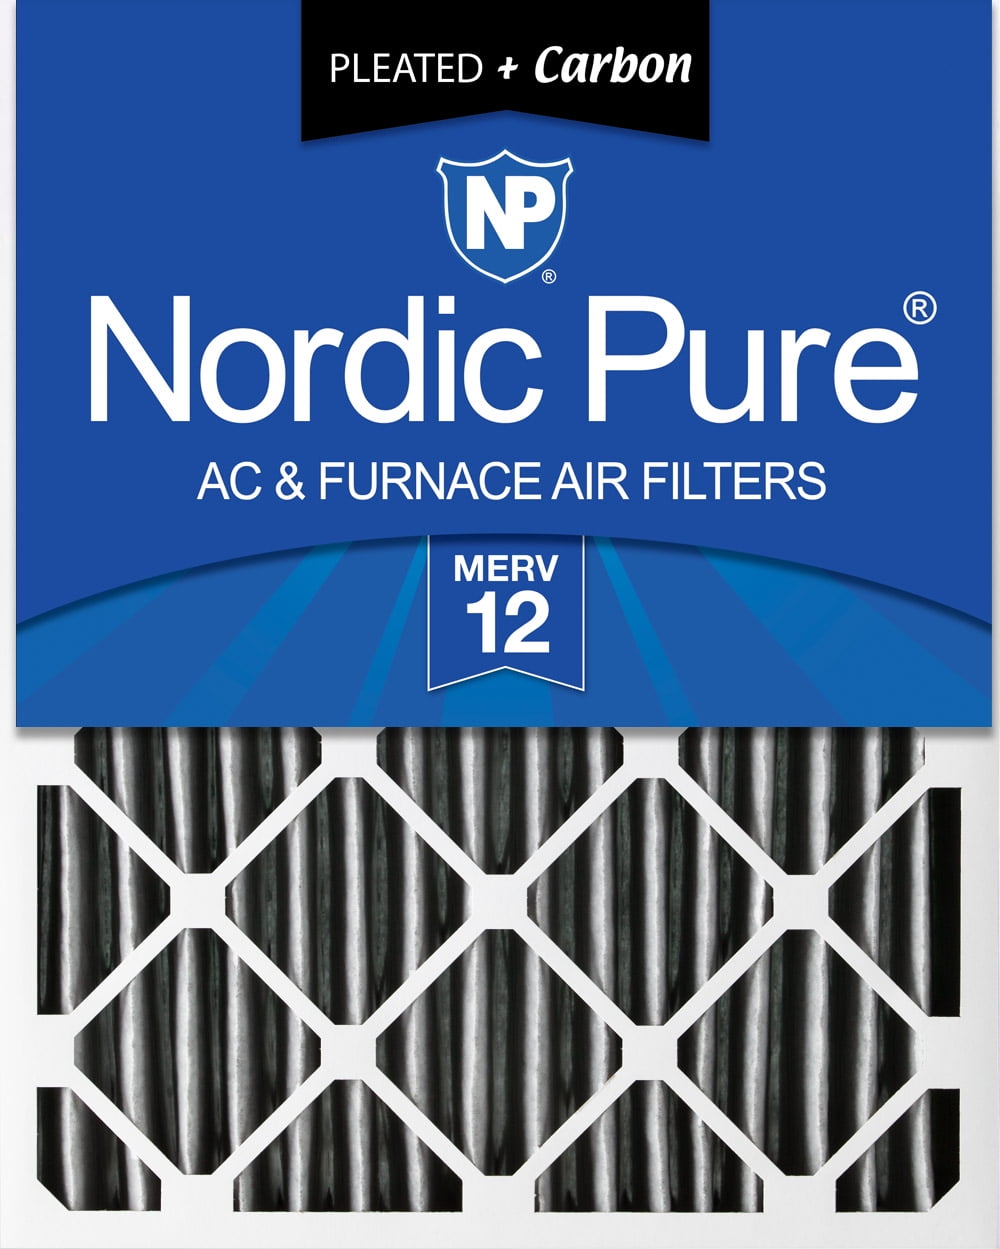 20x25x4 Air Filter Furnace Merv 12 Bulk Nordic Pure 11 Pleated AC 2 Pack 